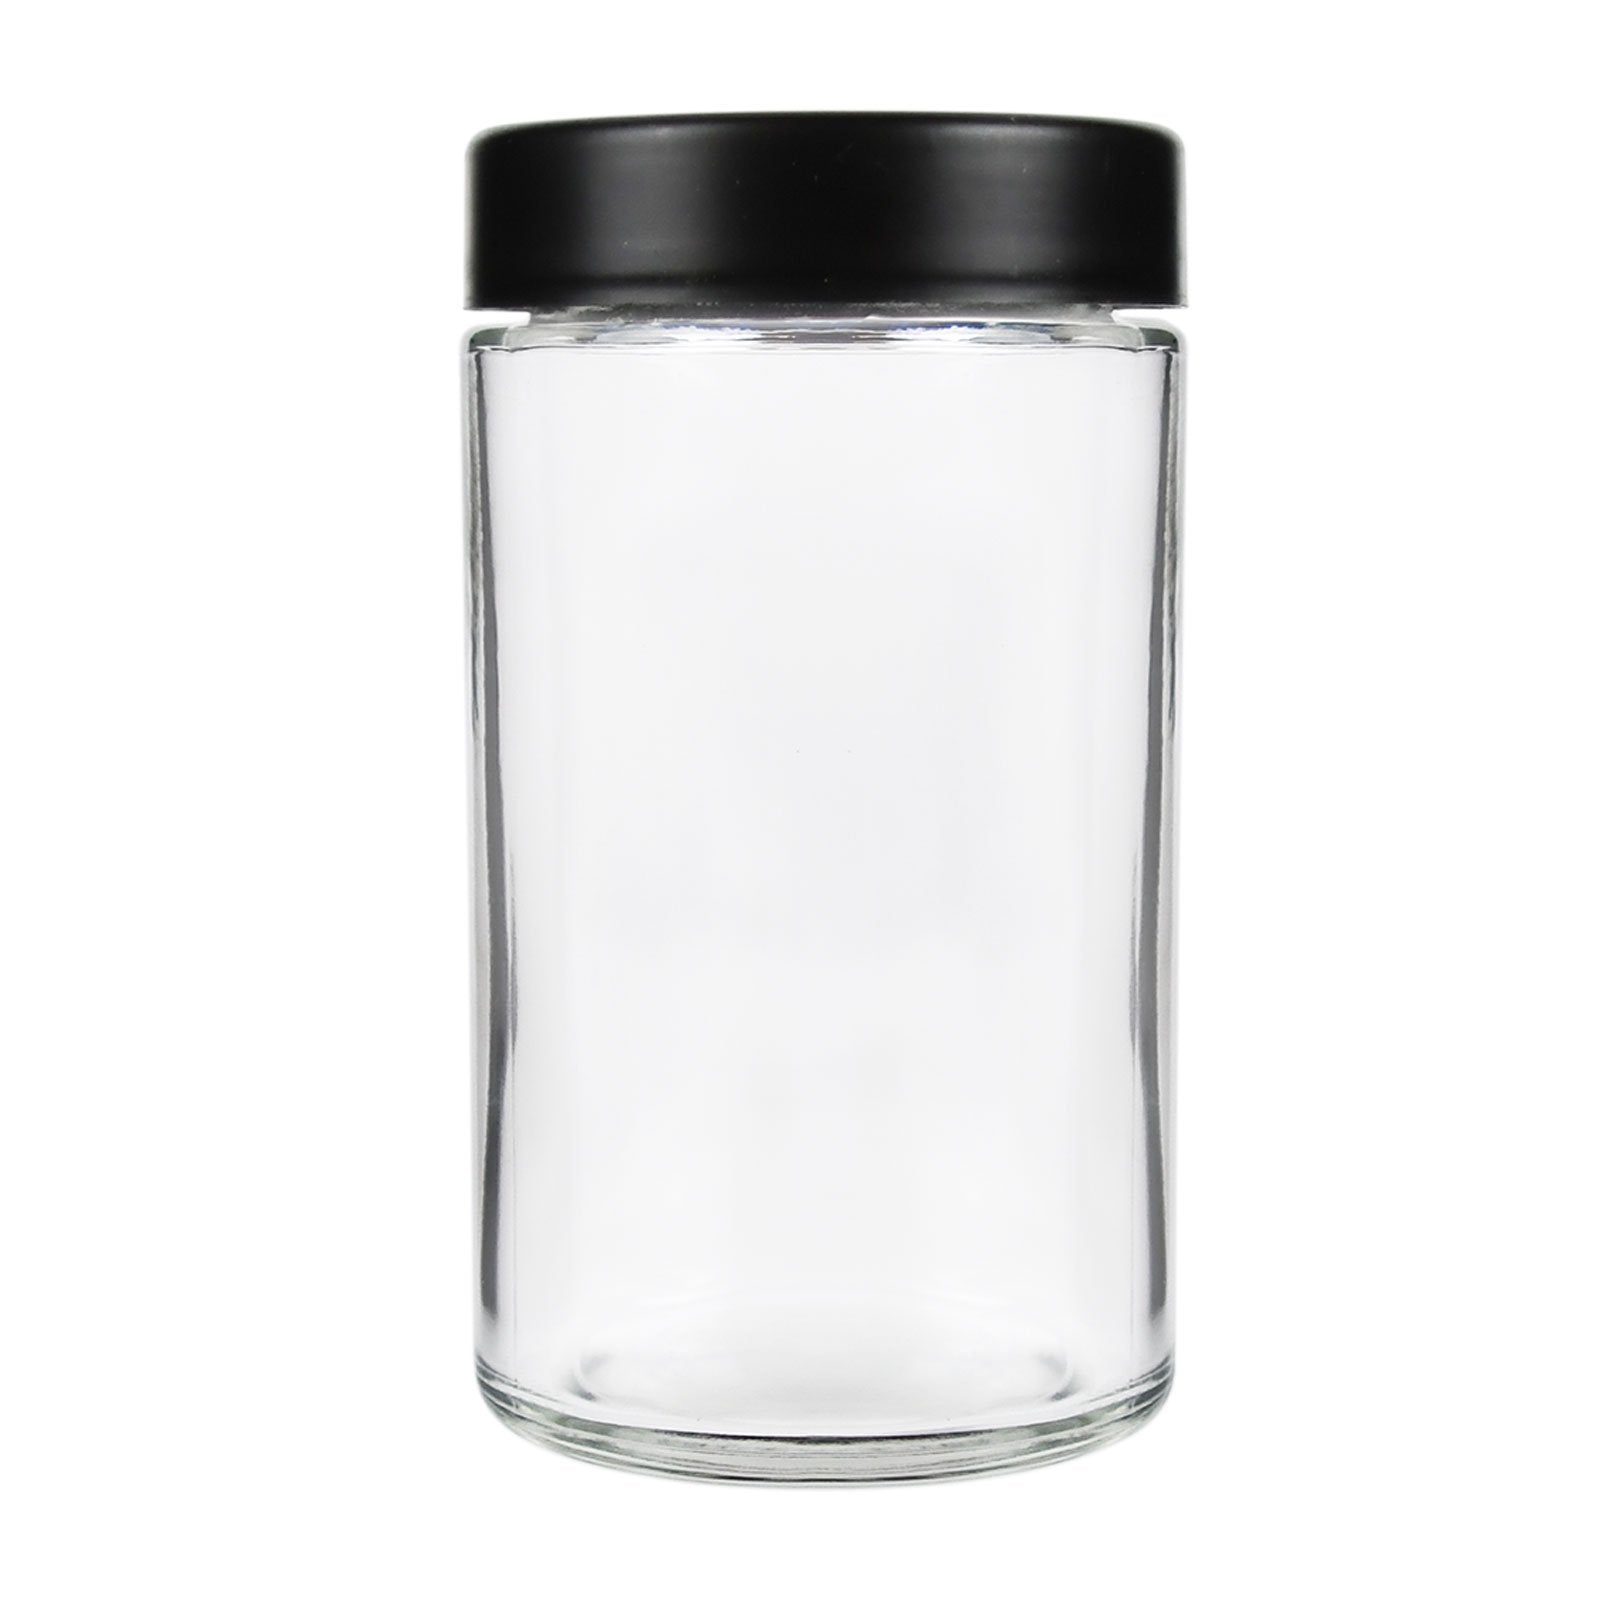 10oz Child Resistant Glass Jars With Black Caps - 14 Grams - 72 Count